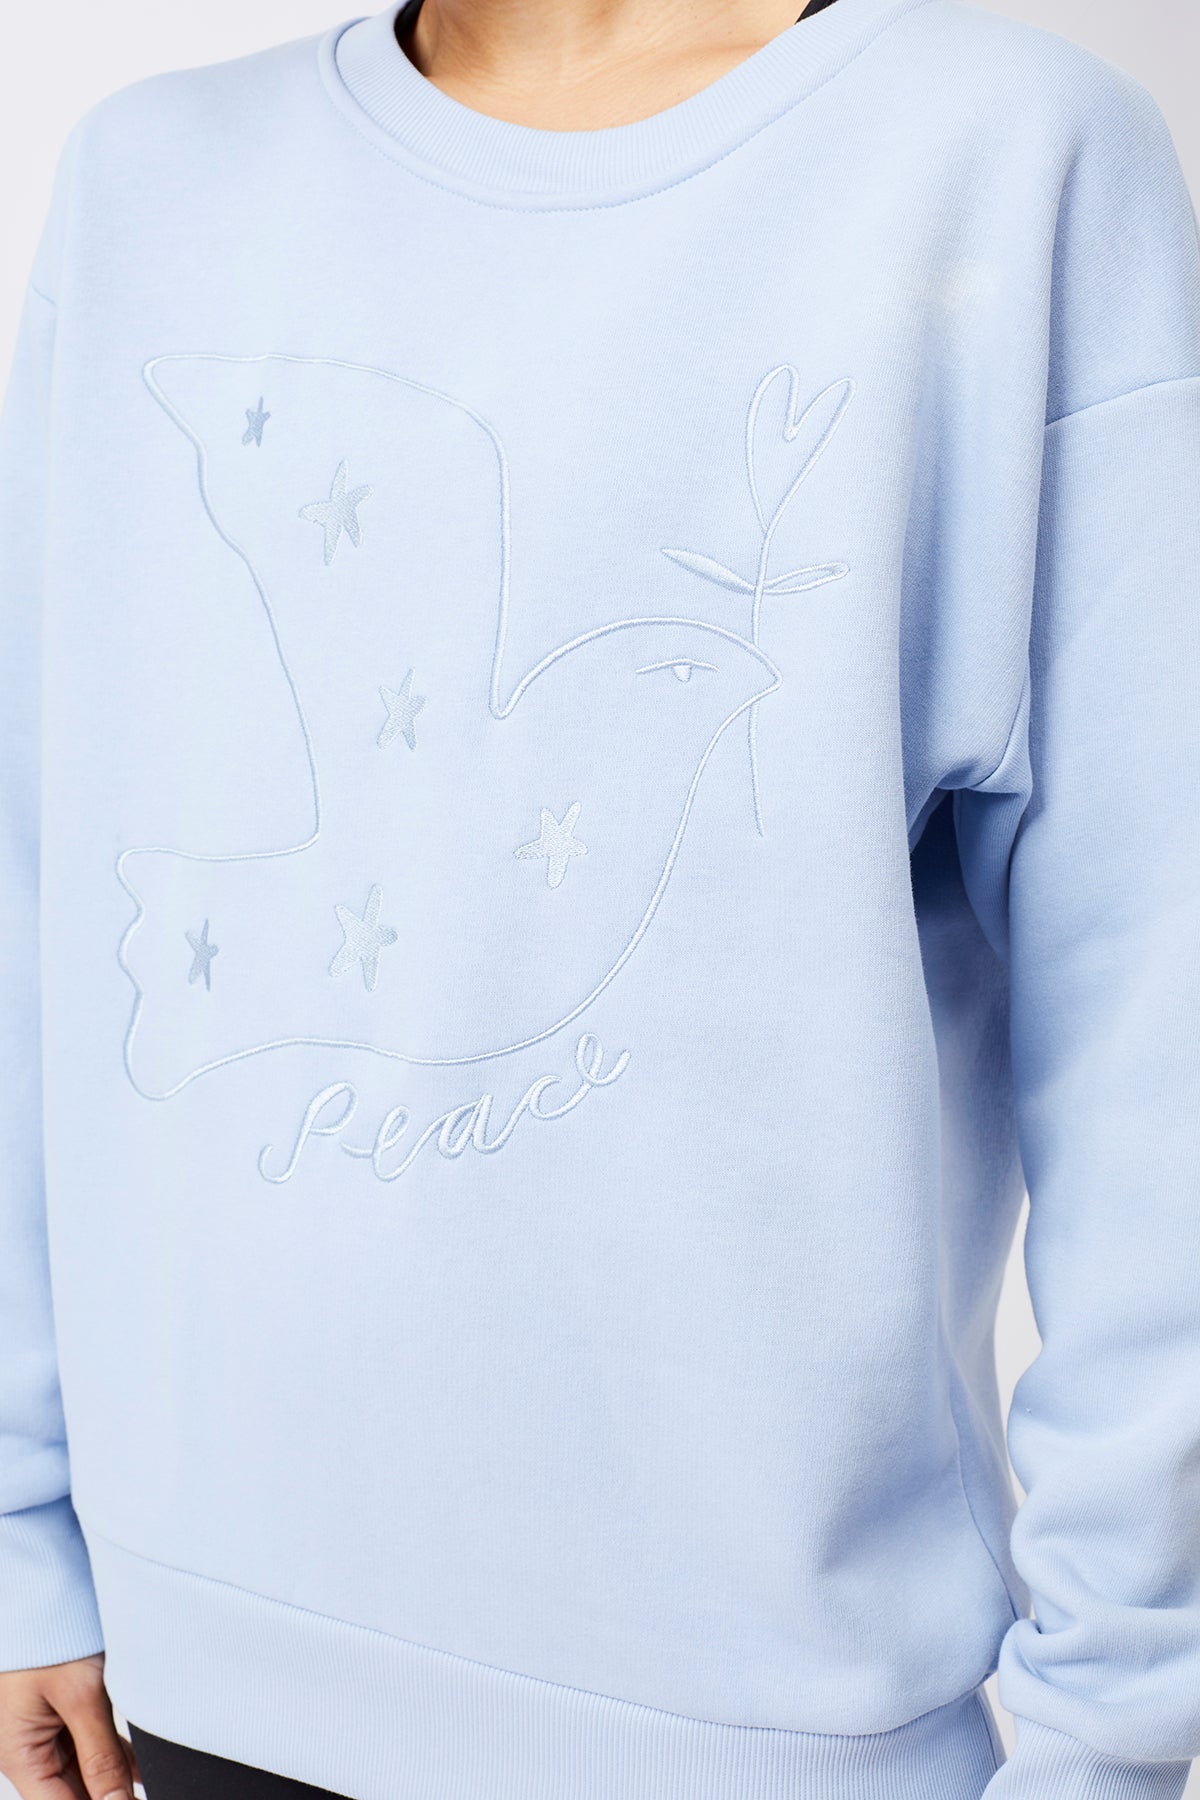 Mandala Yoga Pullover Blau Detail - Peace Sweater